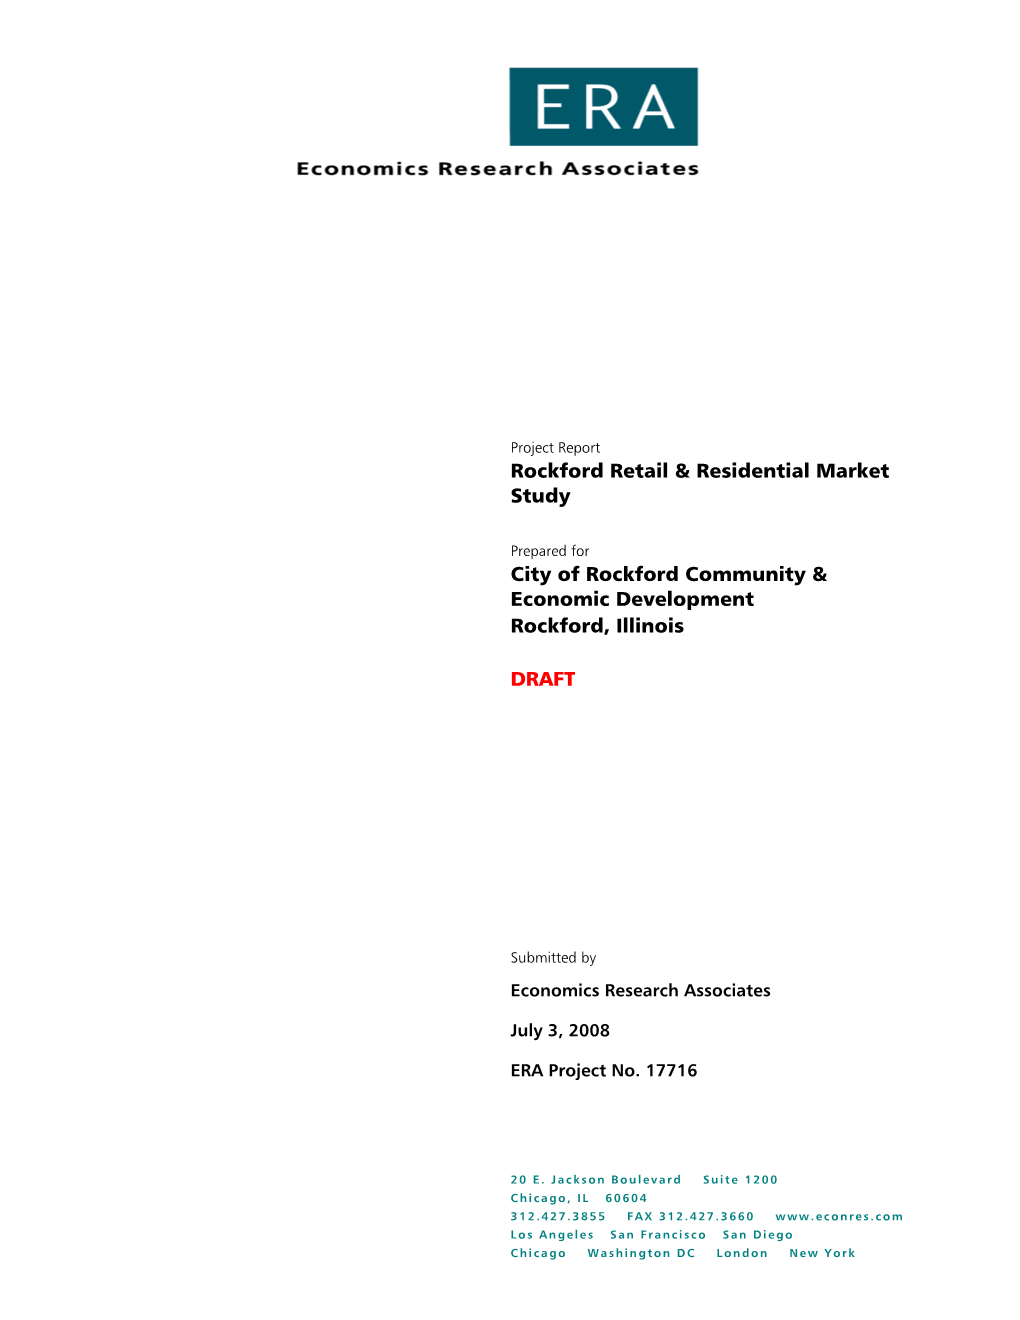 Rockford Retail & Residential Market Study